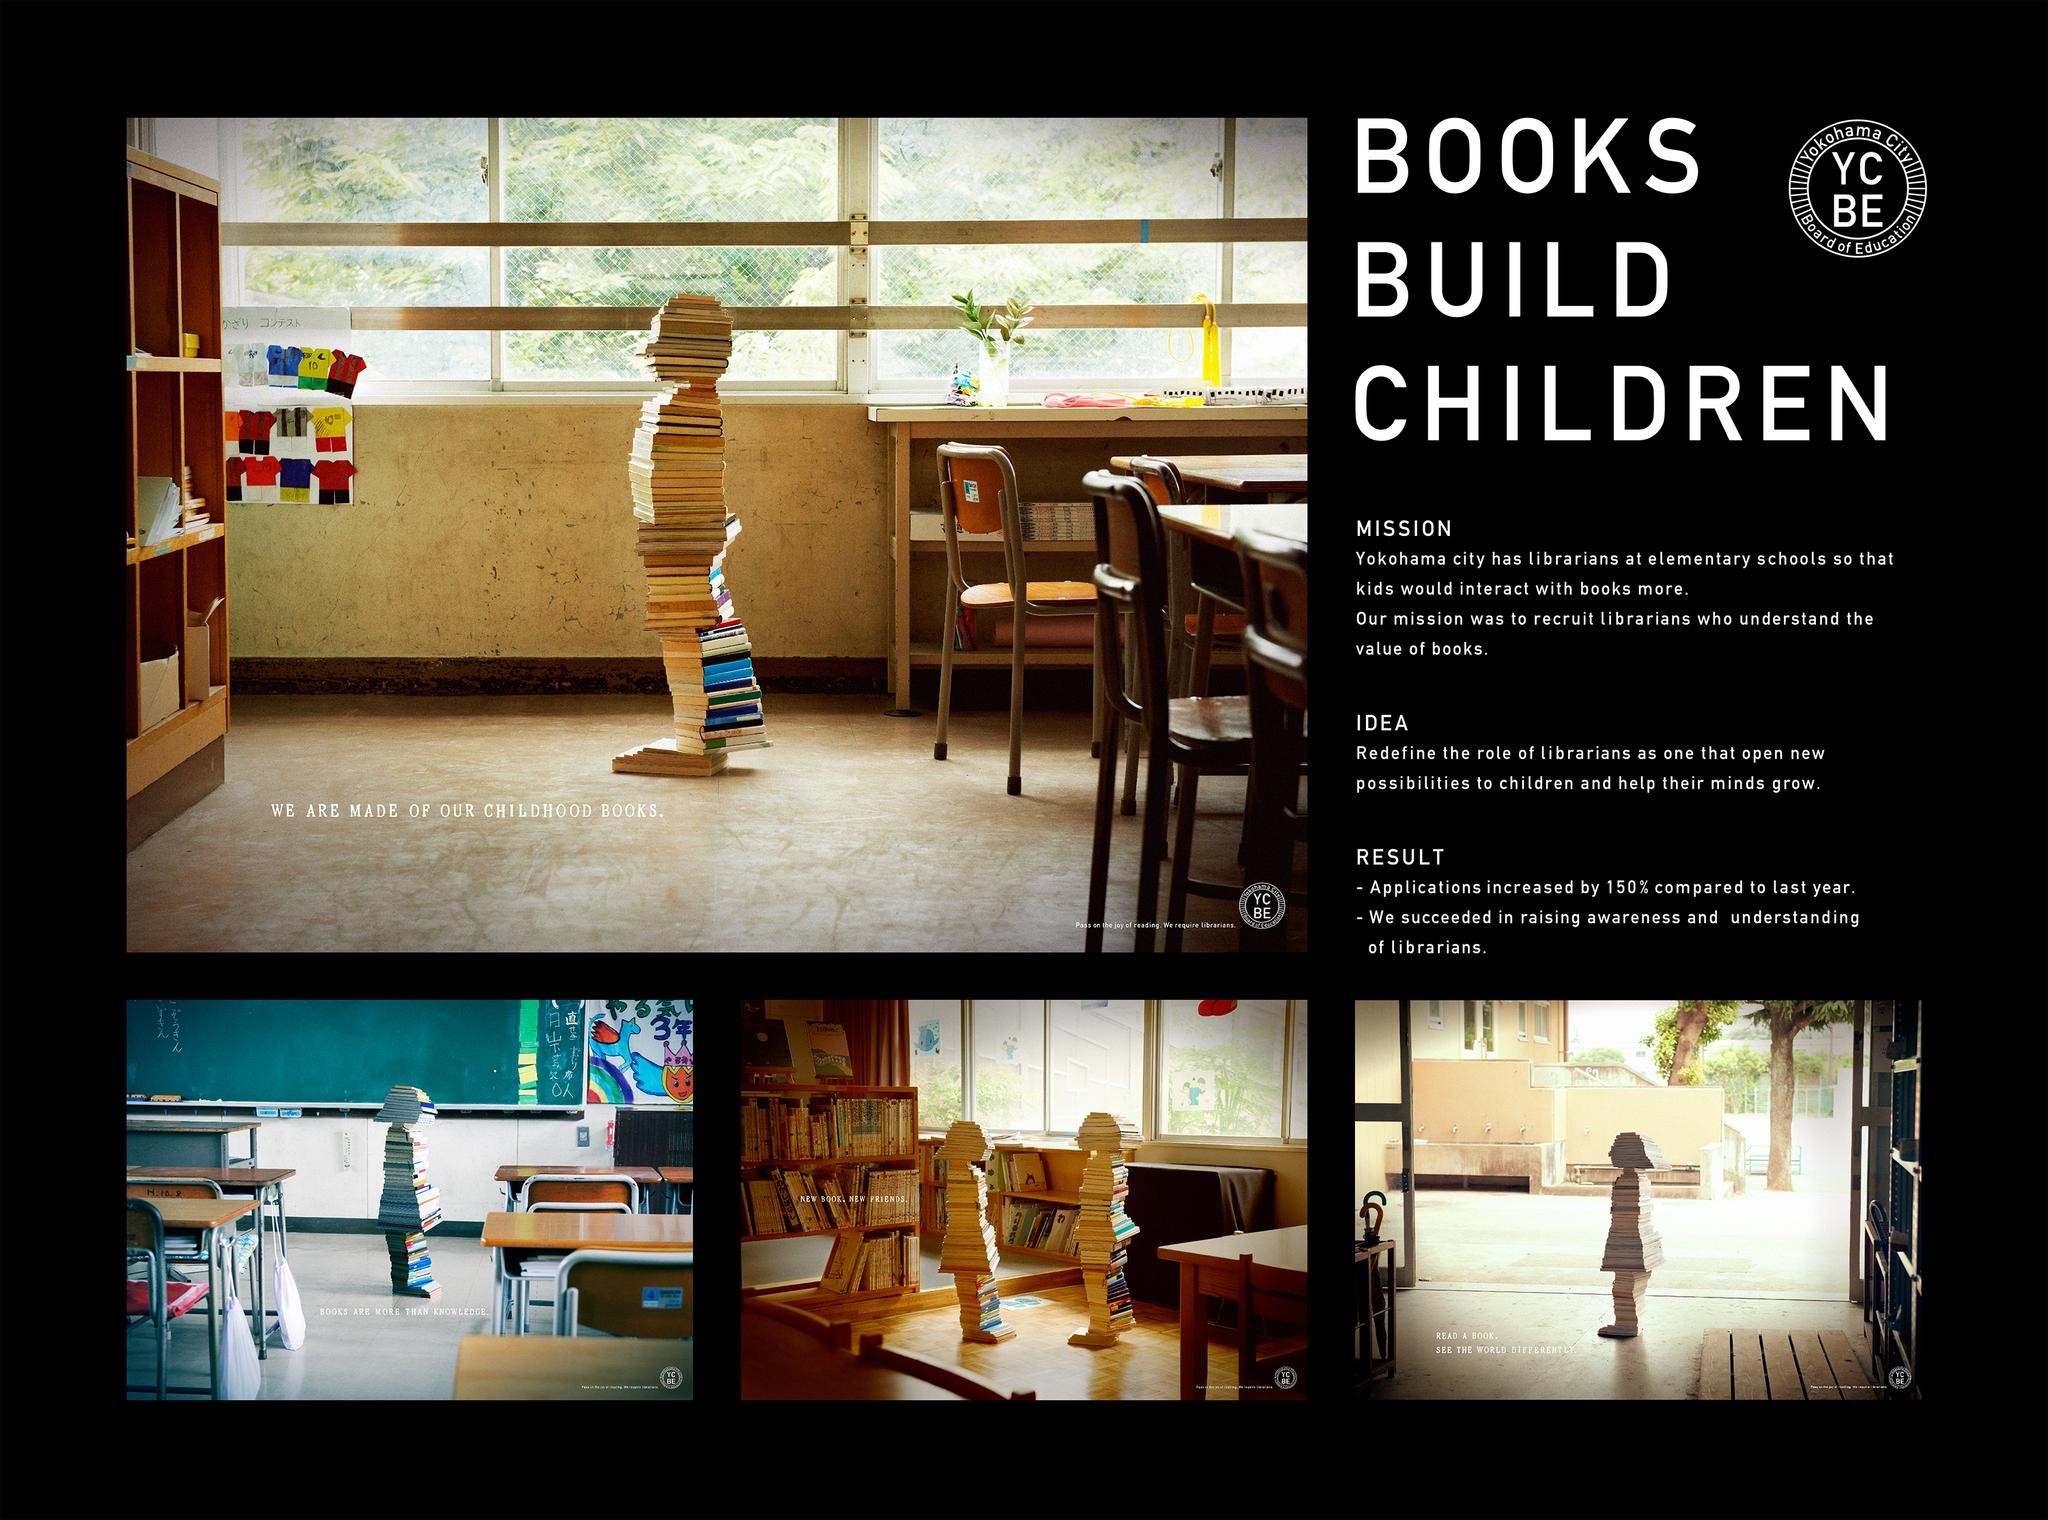 Books build children